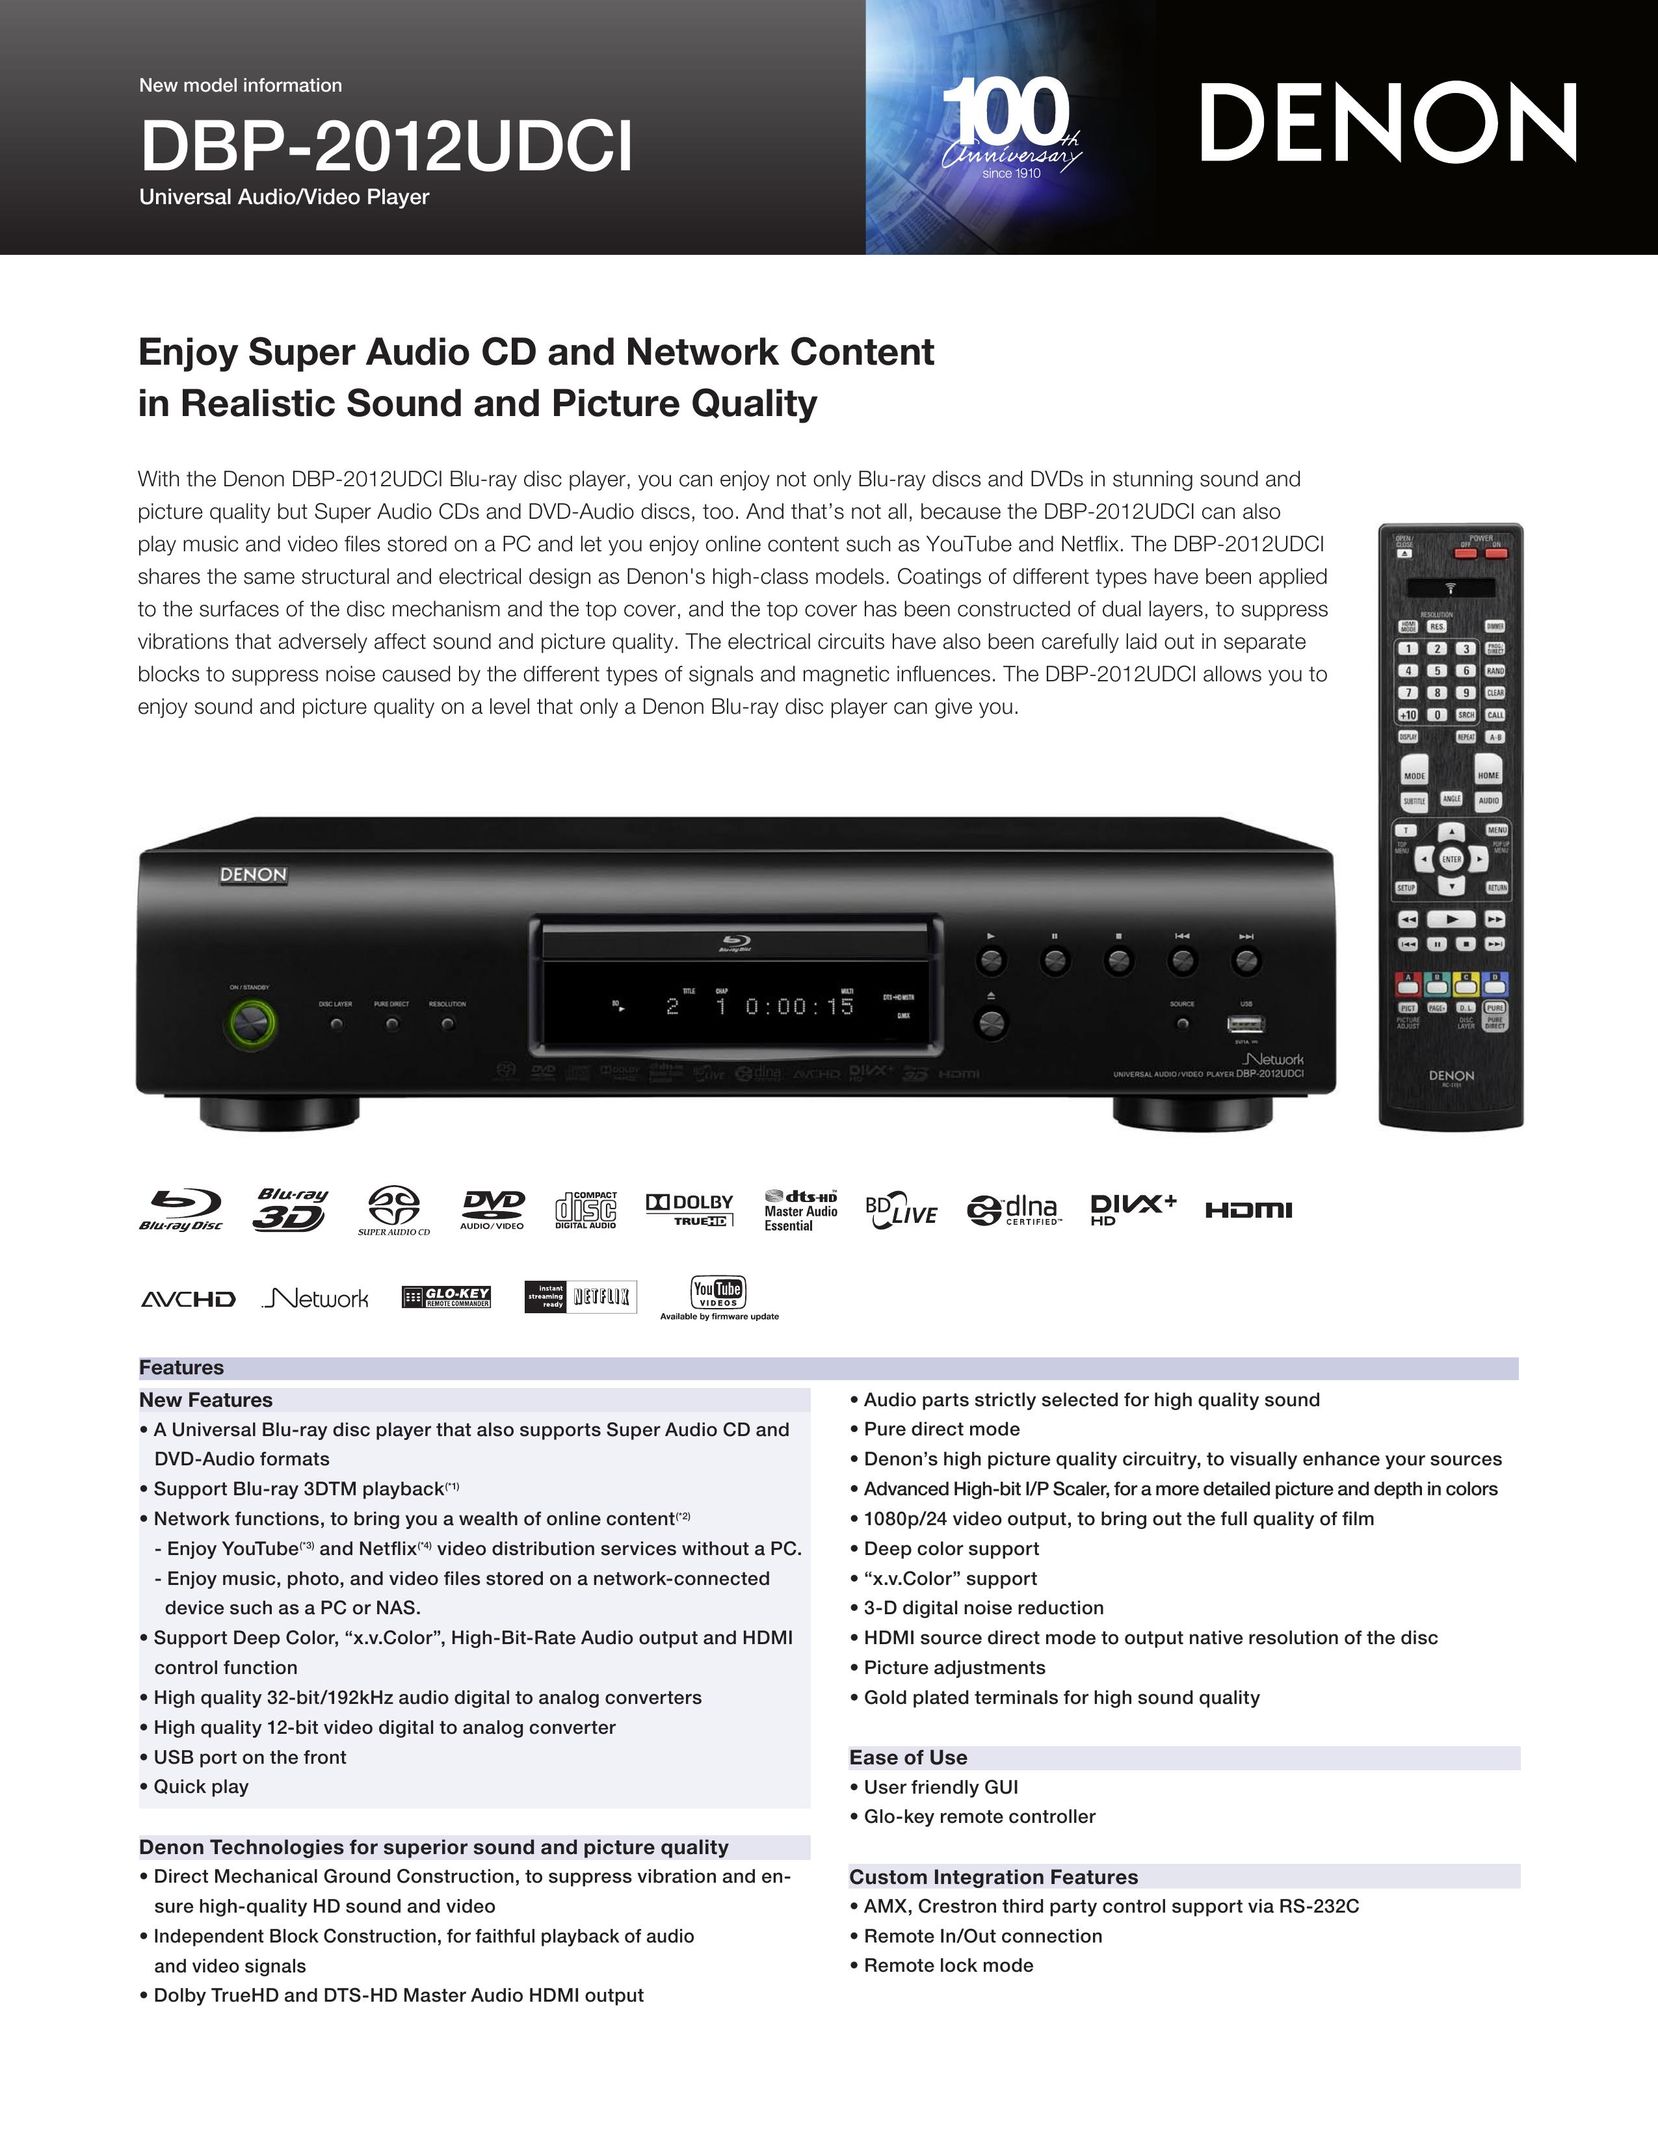 Denon DBP-2012UDCI Blu-ray Player User Manual (Page 1)